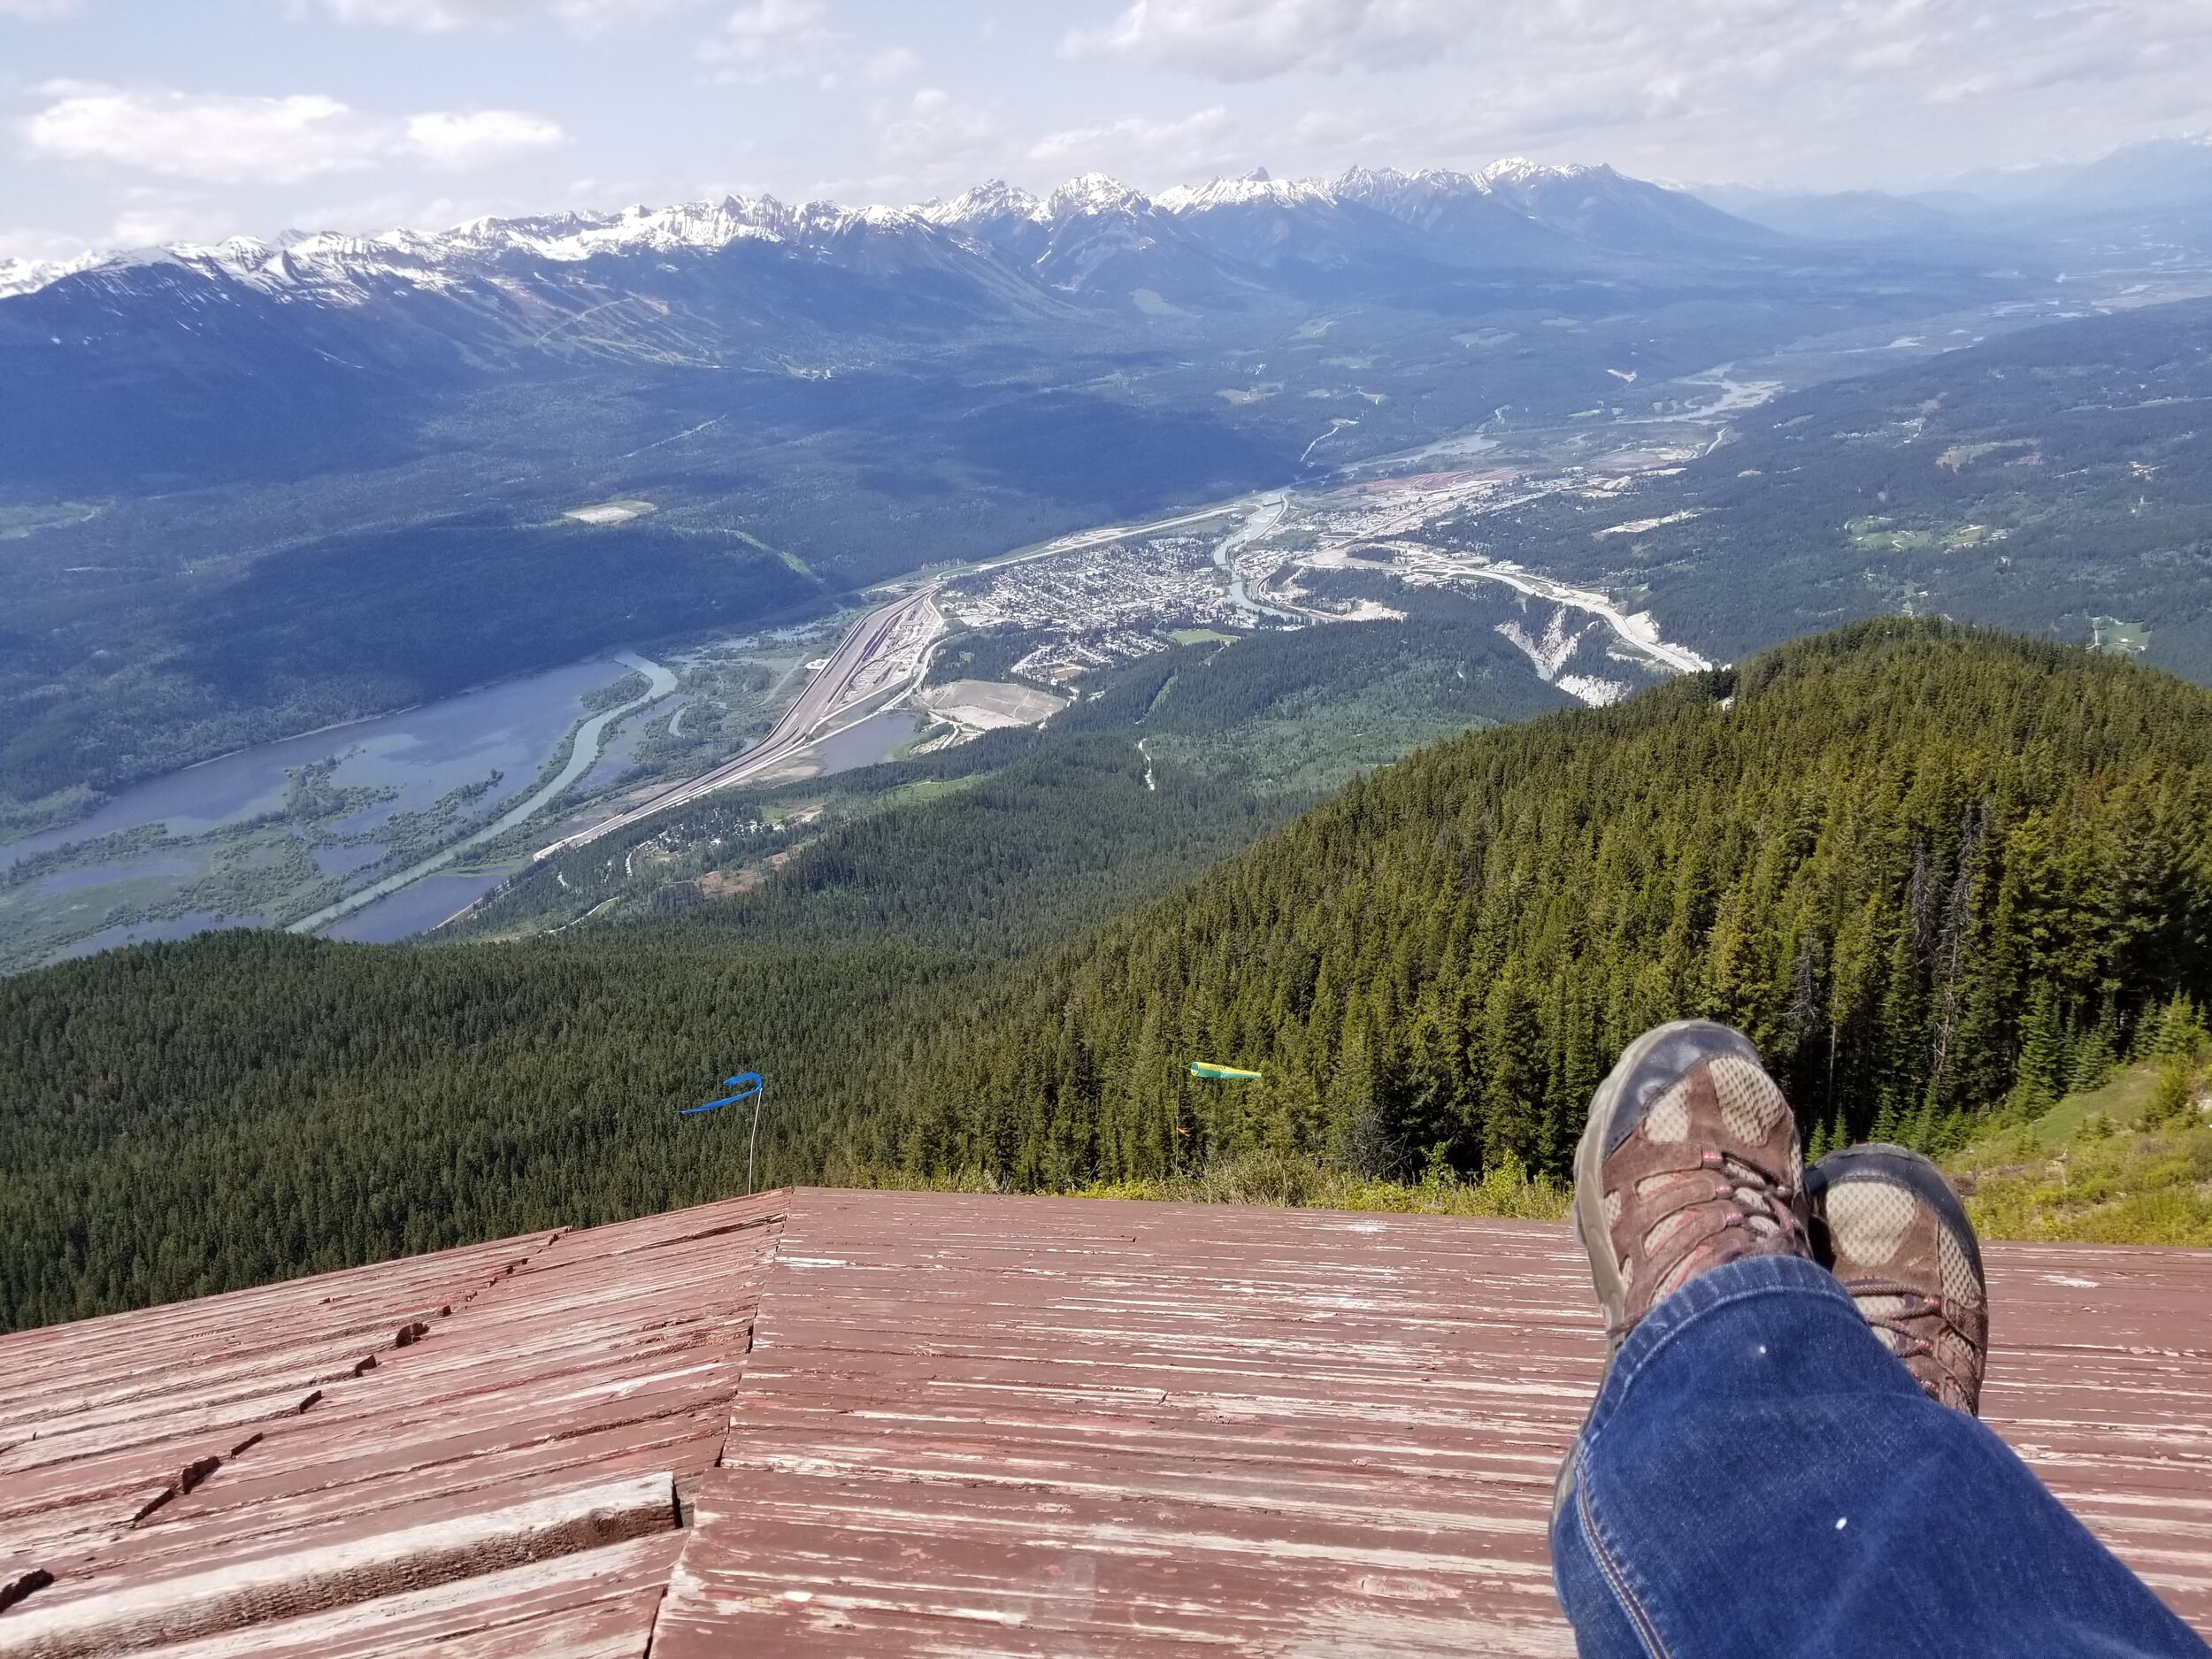 Mount 7 Summit, Golden, BC, Canada